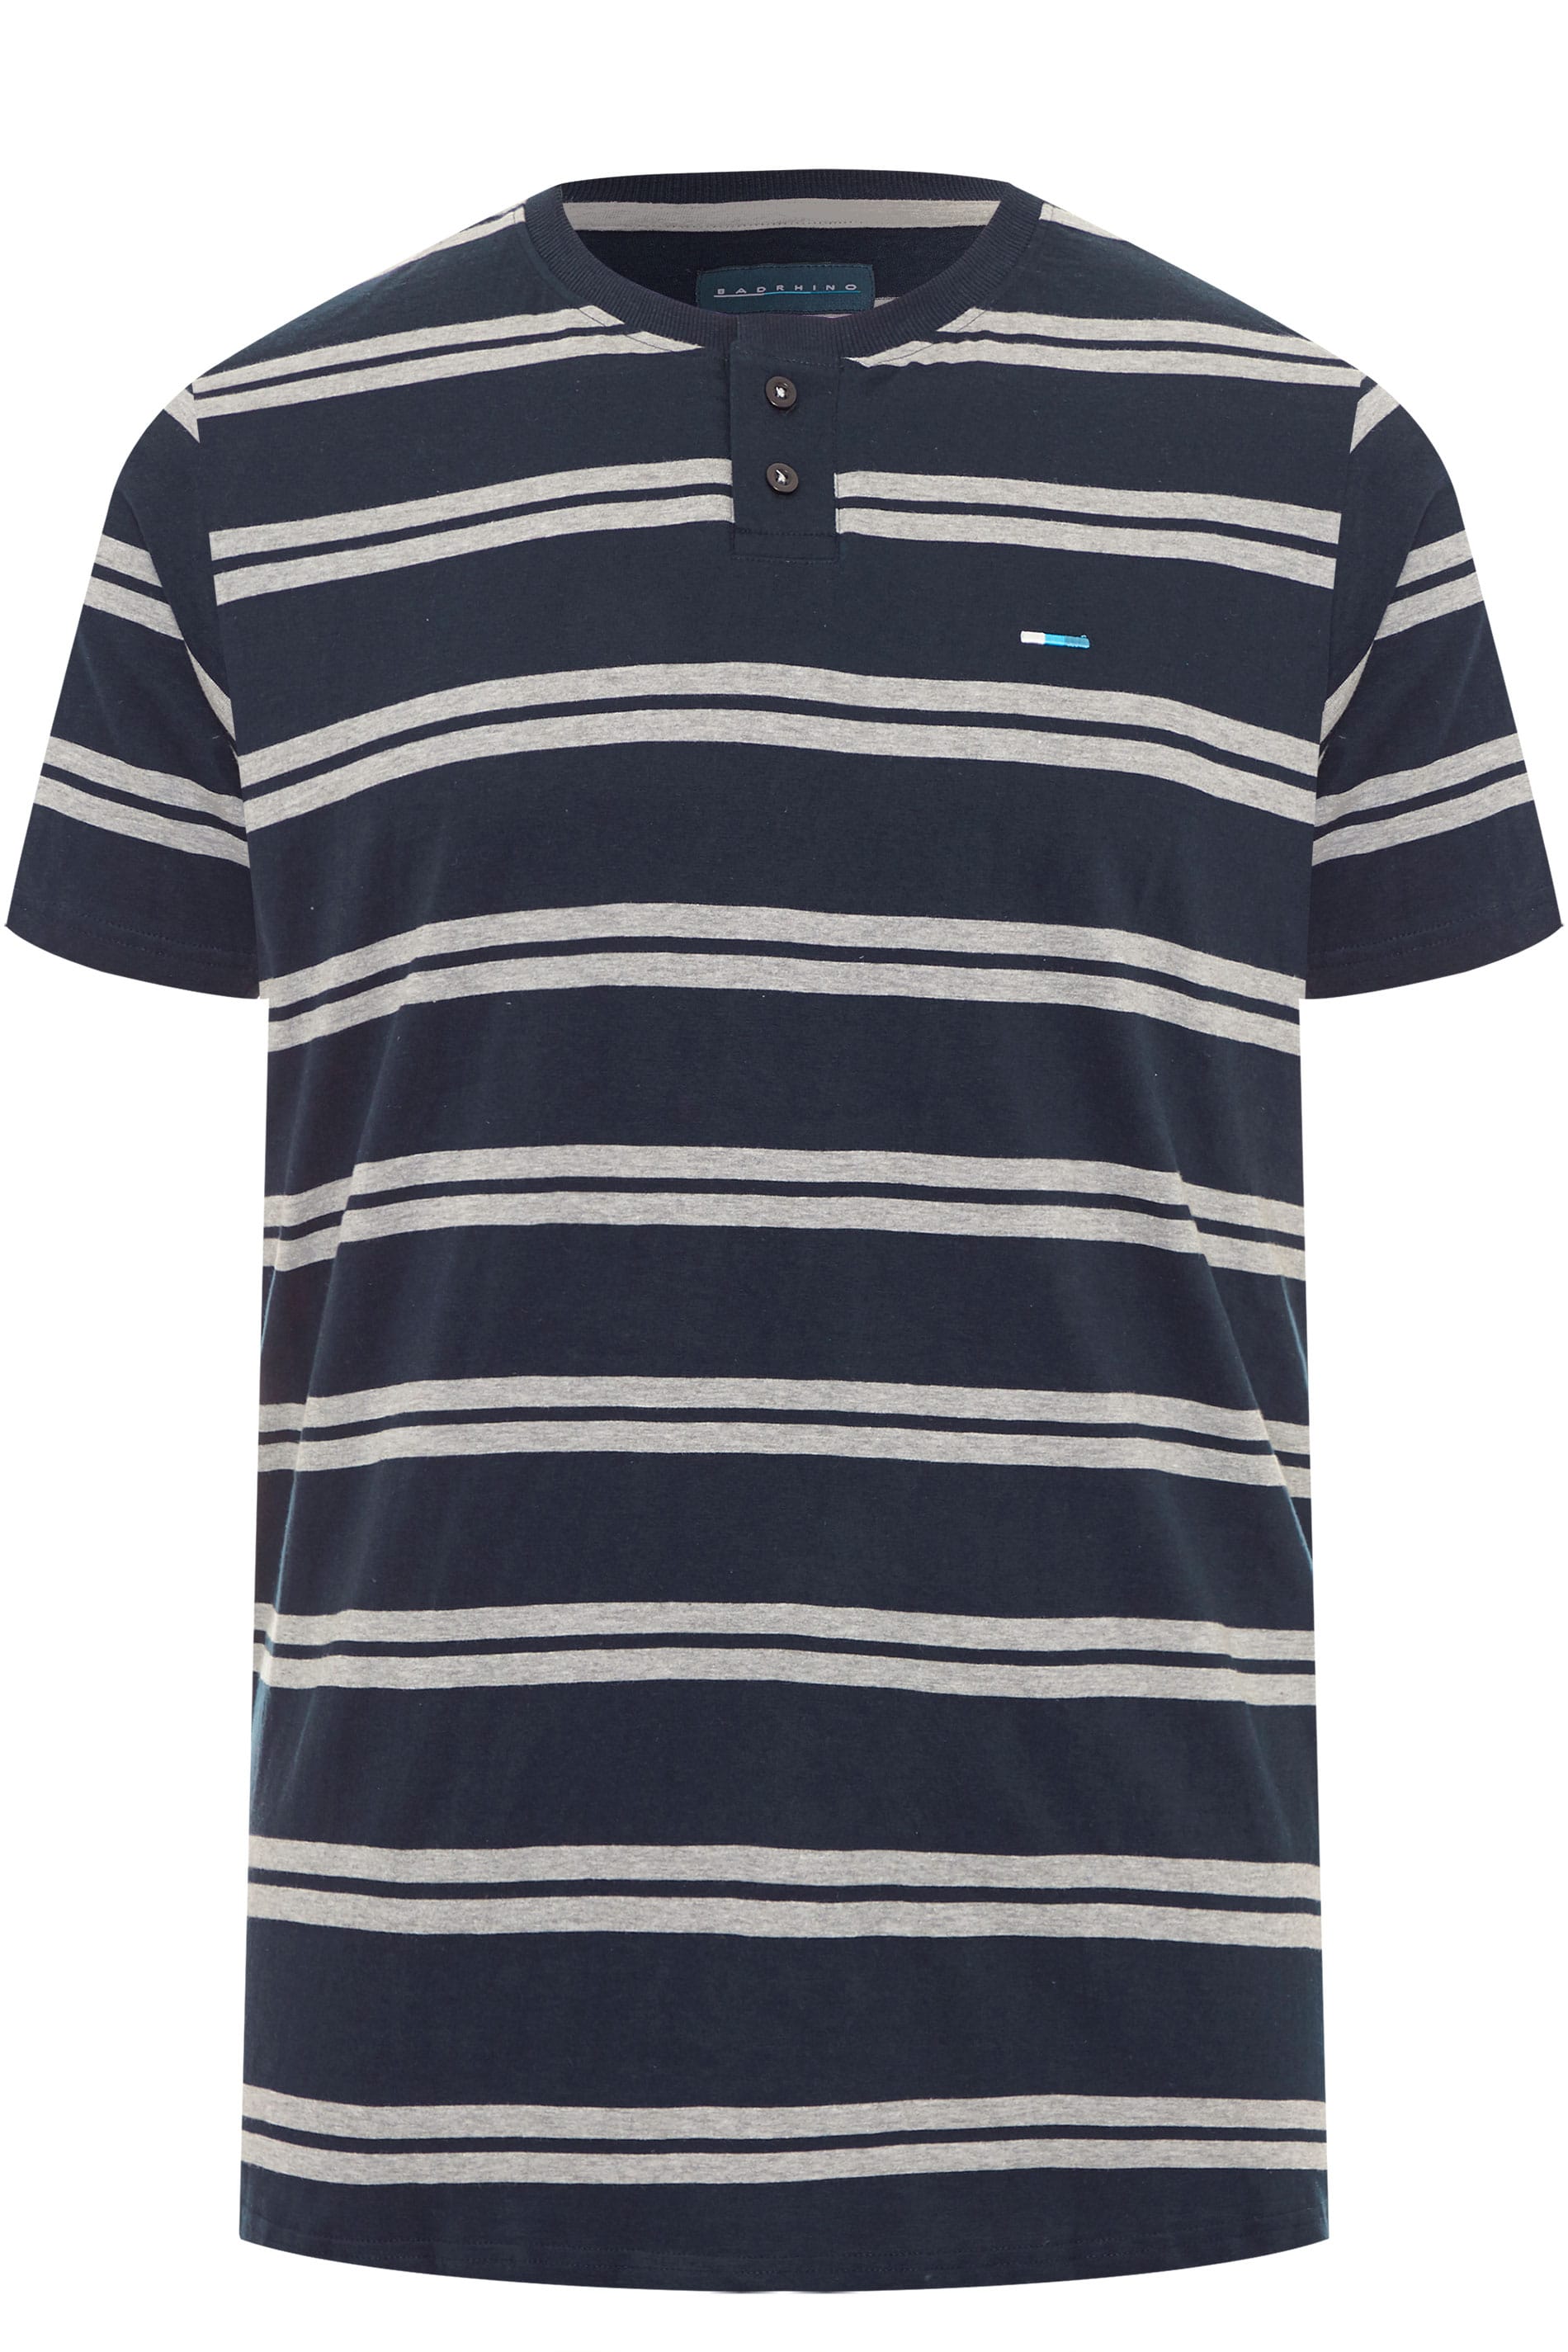 BadRhino Big & Tall Navy Blue & Grey Striped Grandad T-Shirt 1